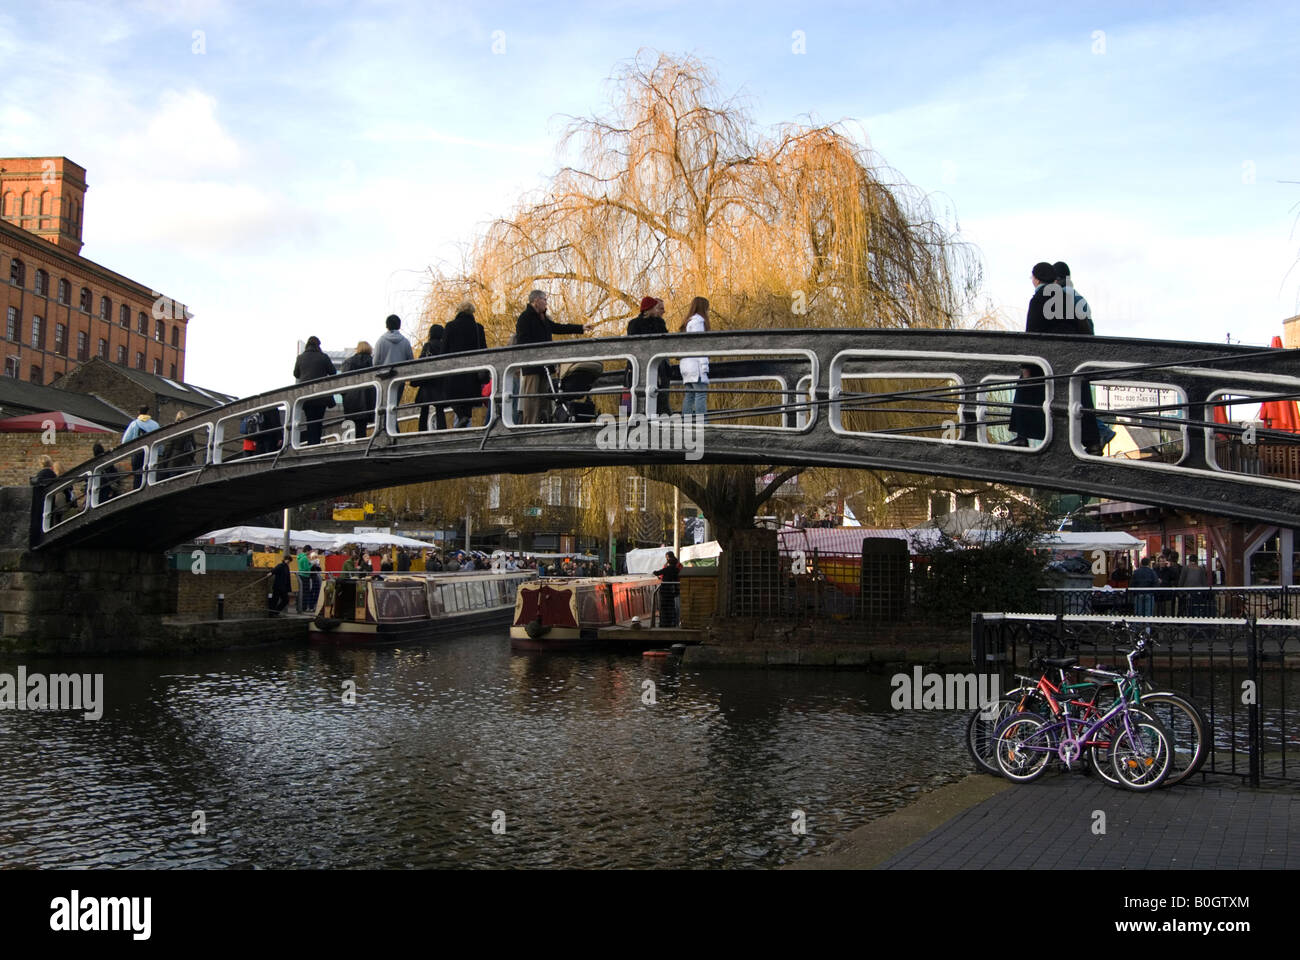 Cast iron bridge spanning canal at Camden Market London England, UK Stock Photo